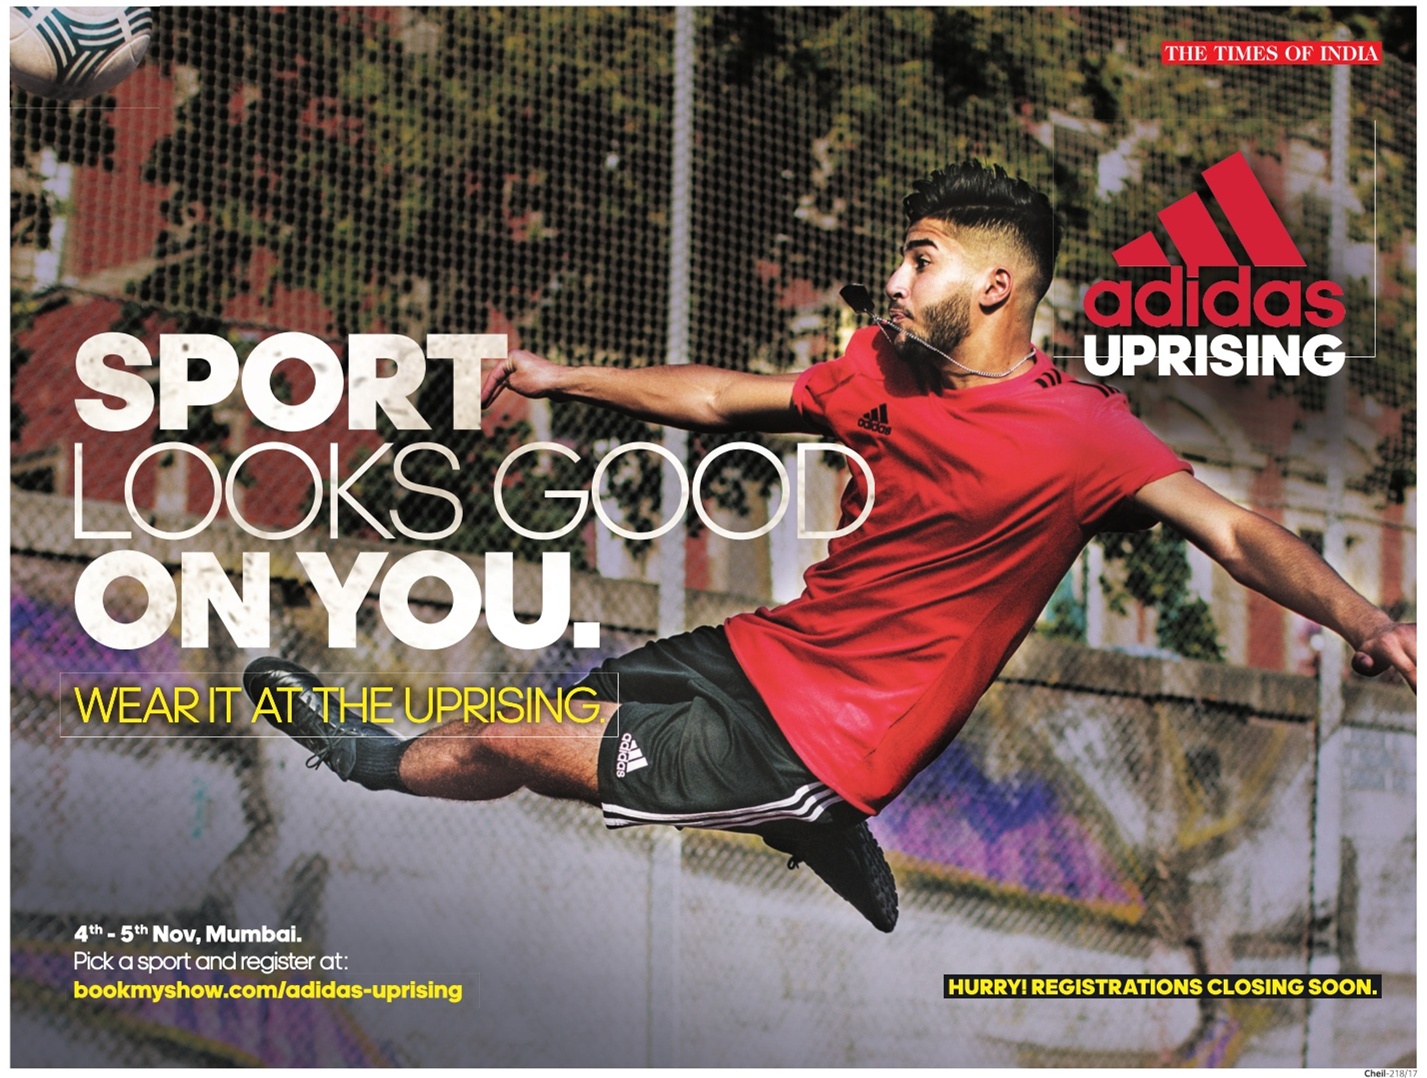 Bedst olie Antagonisme Adidas Uprising Sportlooks Good On You Ad - Advert Gallery